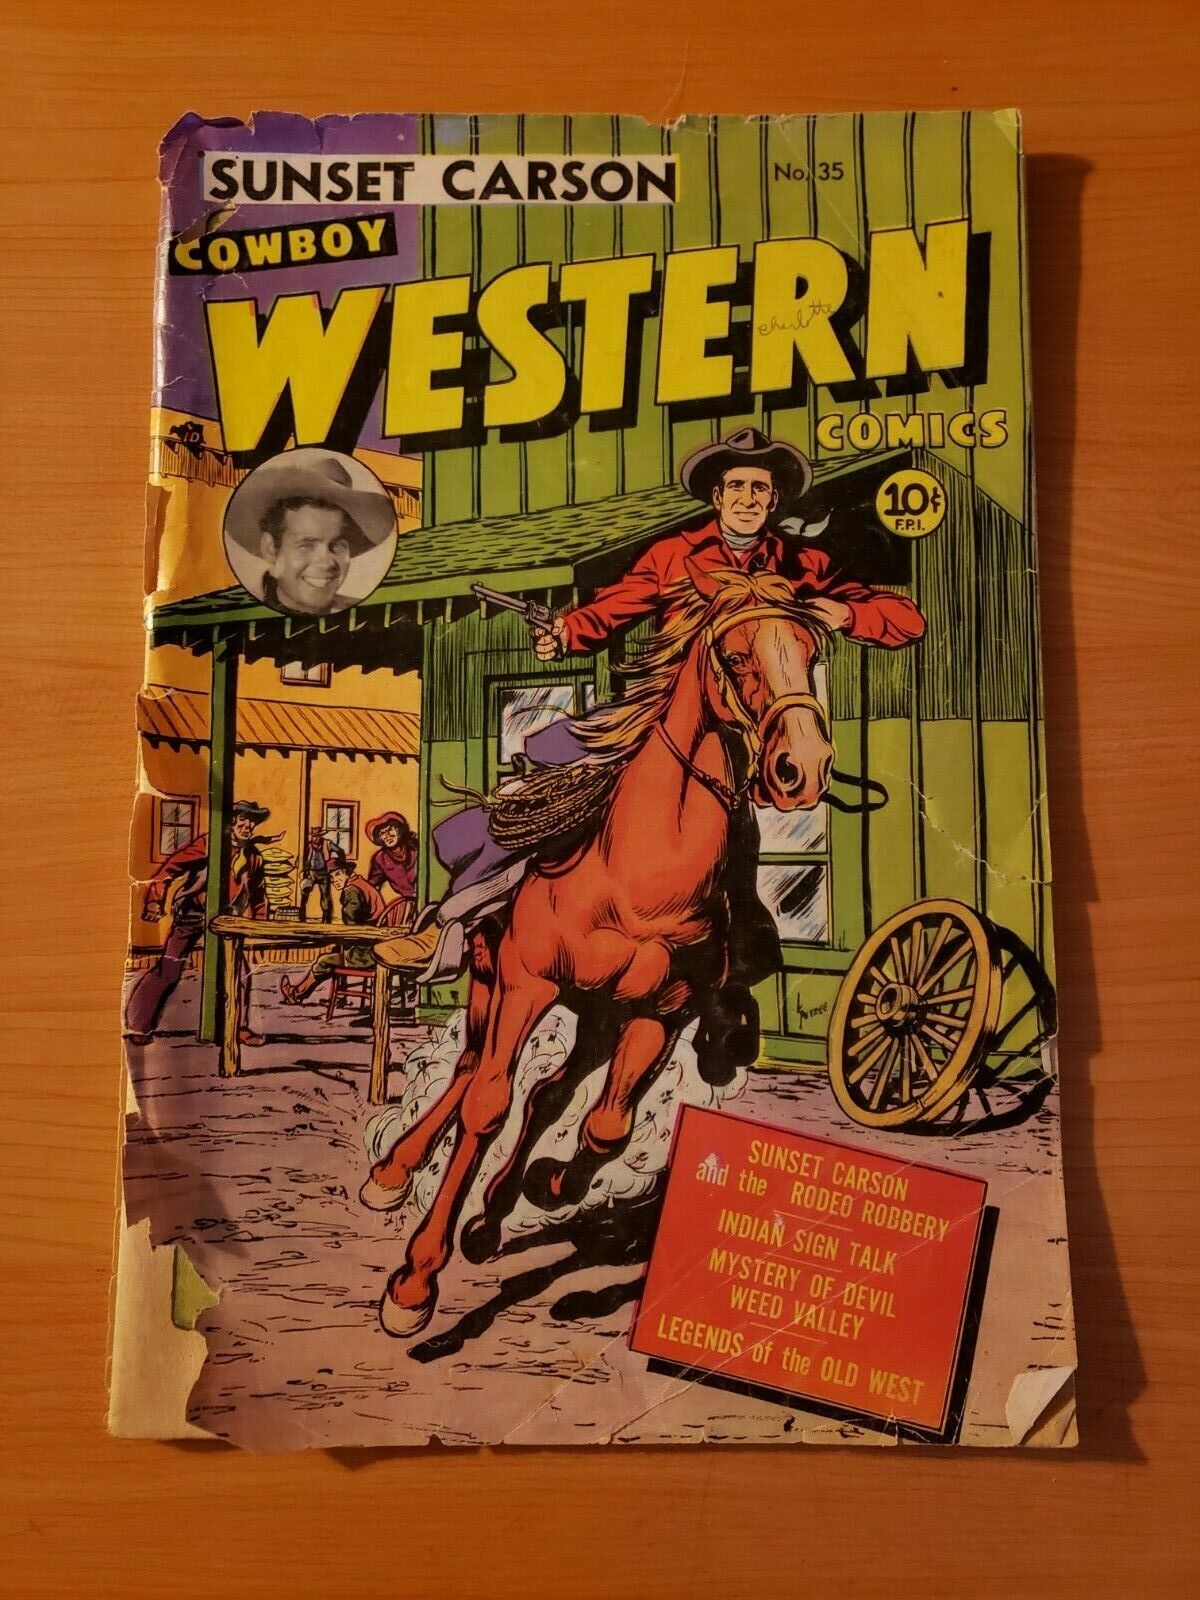 Sunset Carson Cowboy Western Comics #35 ~ GOOD GD ~ 1951 Charlton Comics